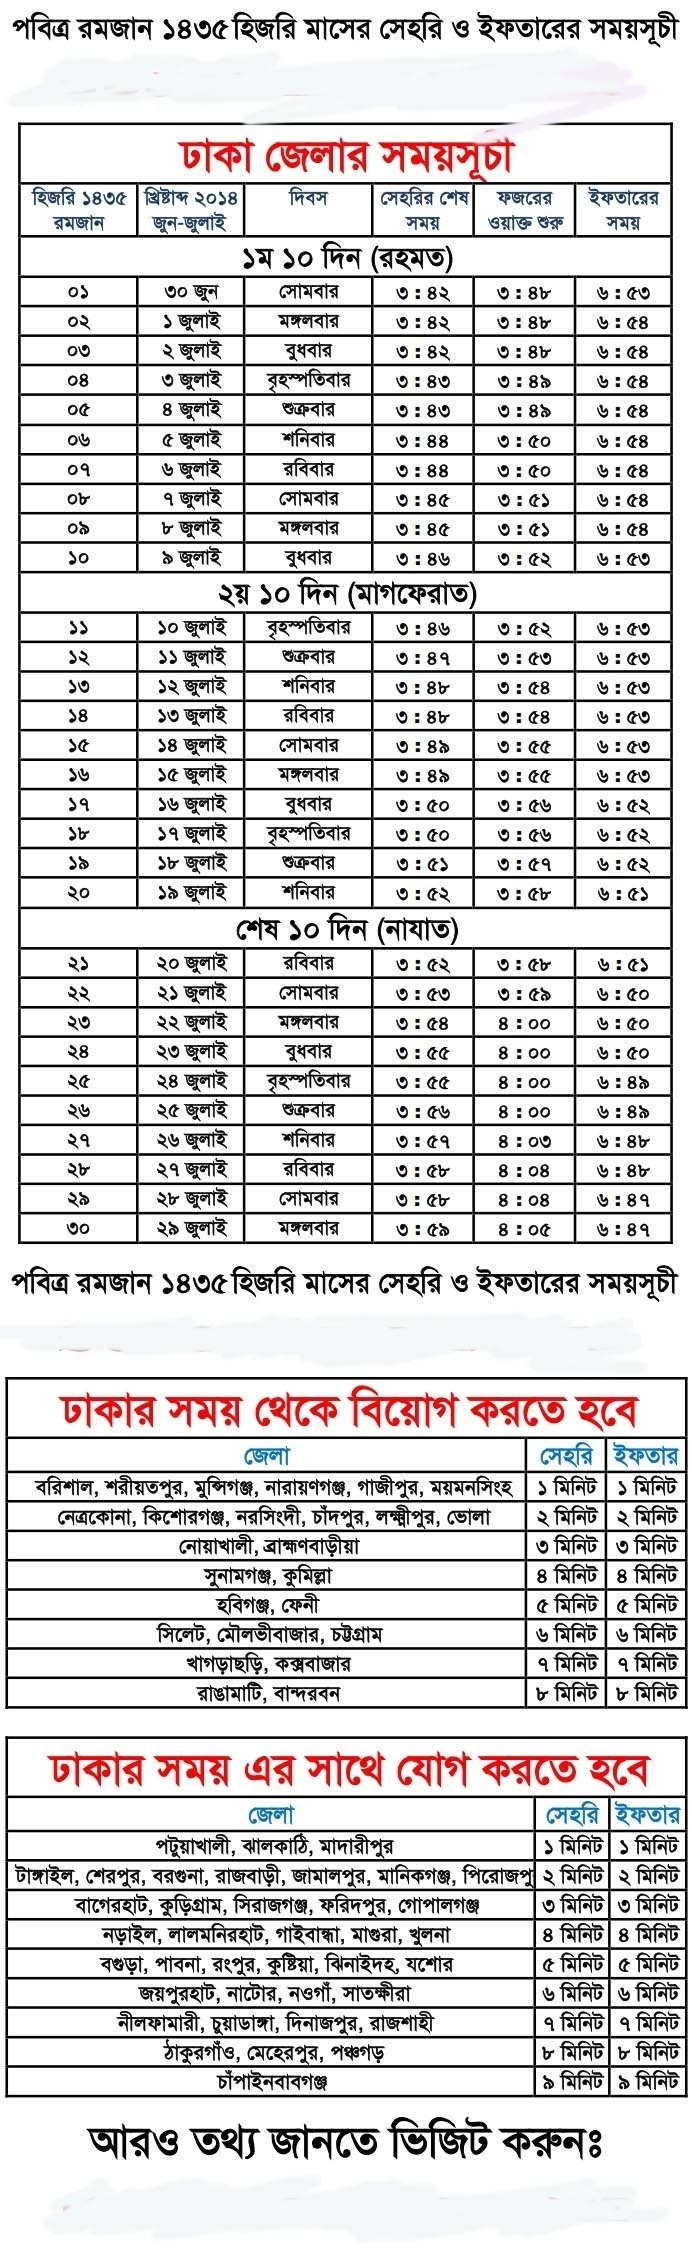 Namaz Sehri Iftar Time In Bangladesh | Template Calendar Printable throughout Namaz Sehri Iftar Time In Bangladesh